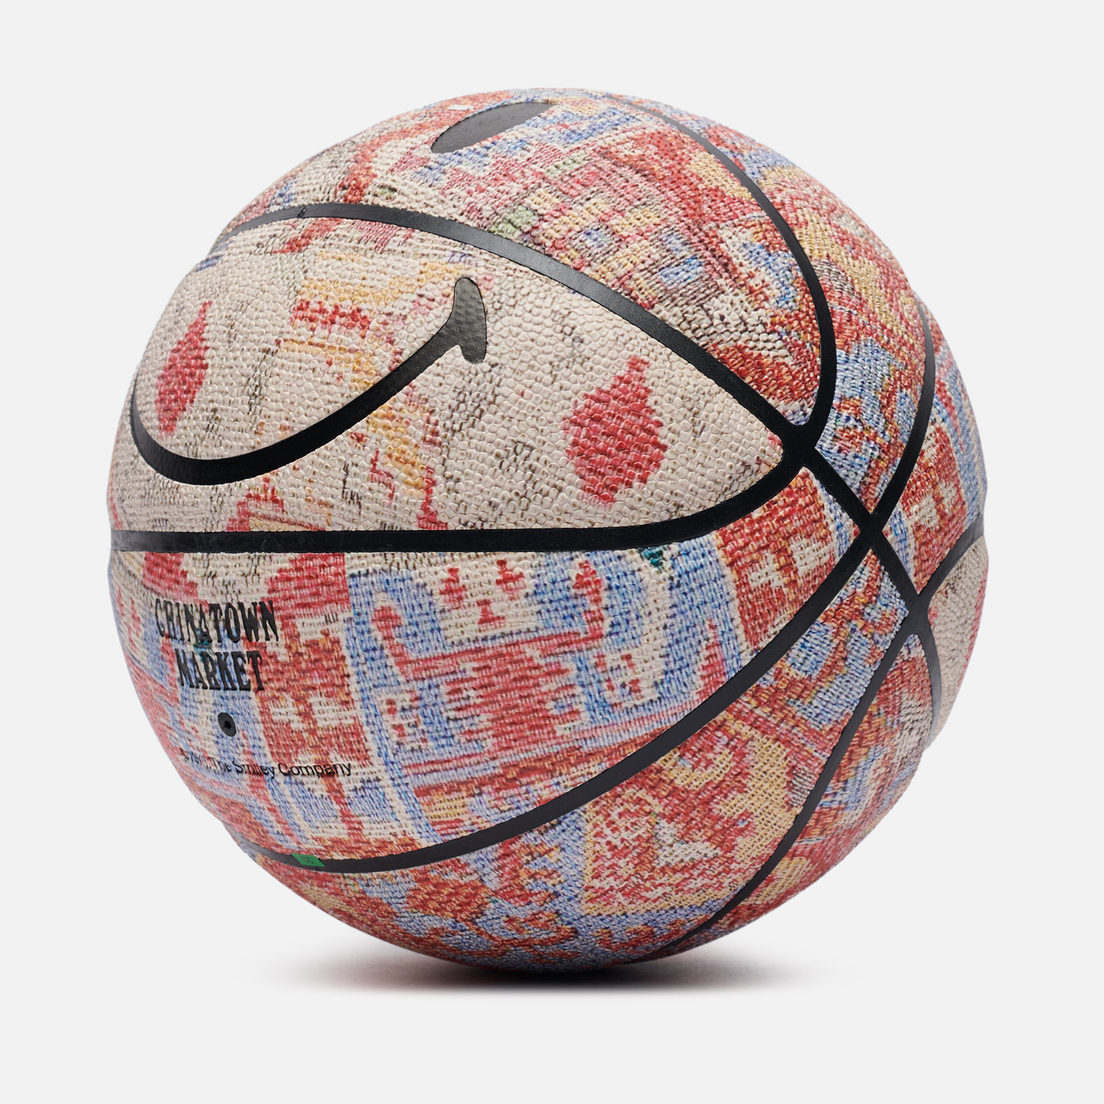 Chinatown Market Баскетбольный мяч Smiley Patchwork Rug